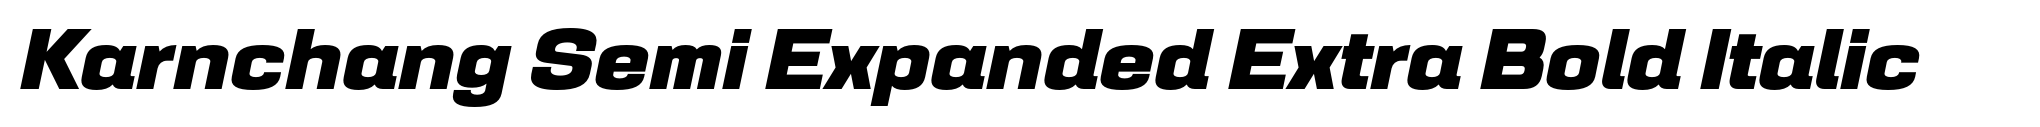 Karnchang Semi Expanded Extra Bold Italic image